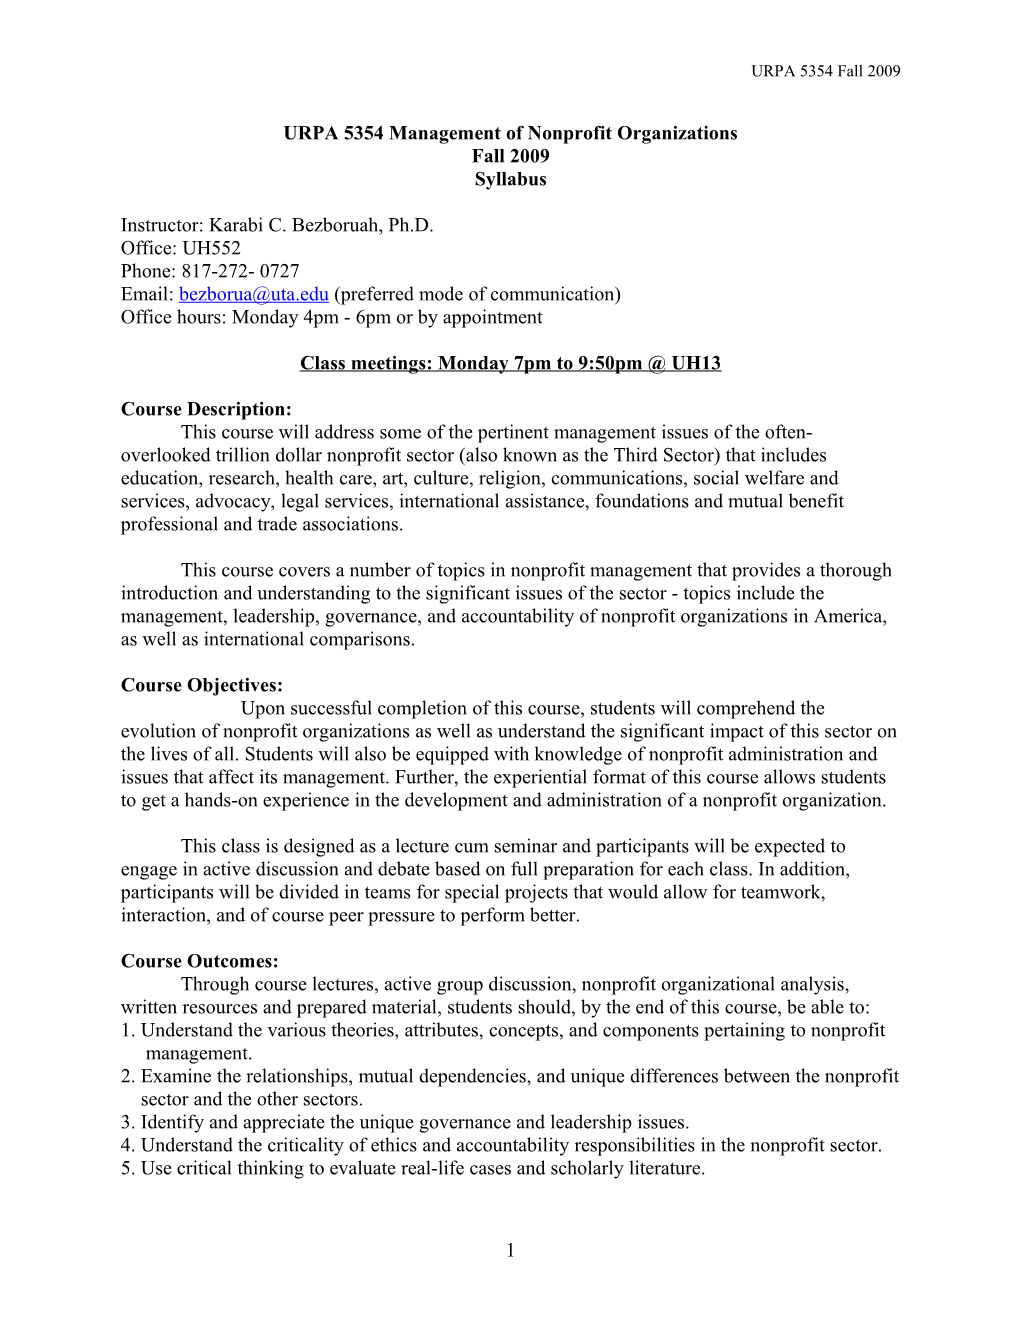 URPA 5354 Management of Nonprofit Organizations